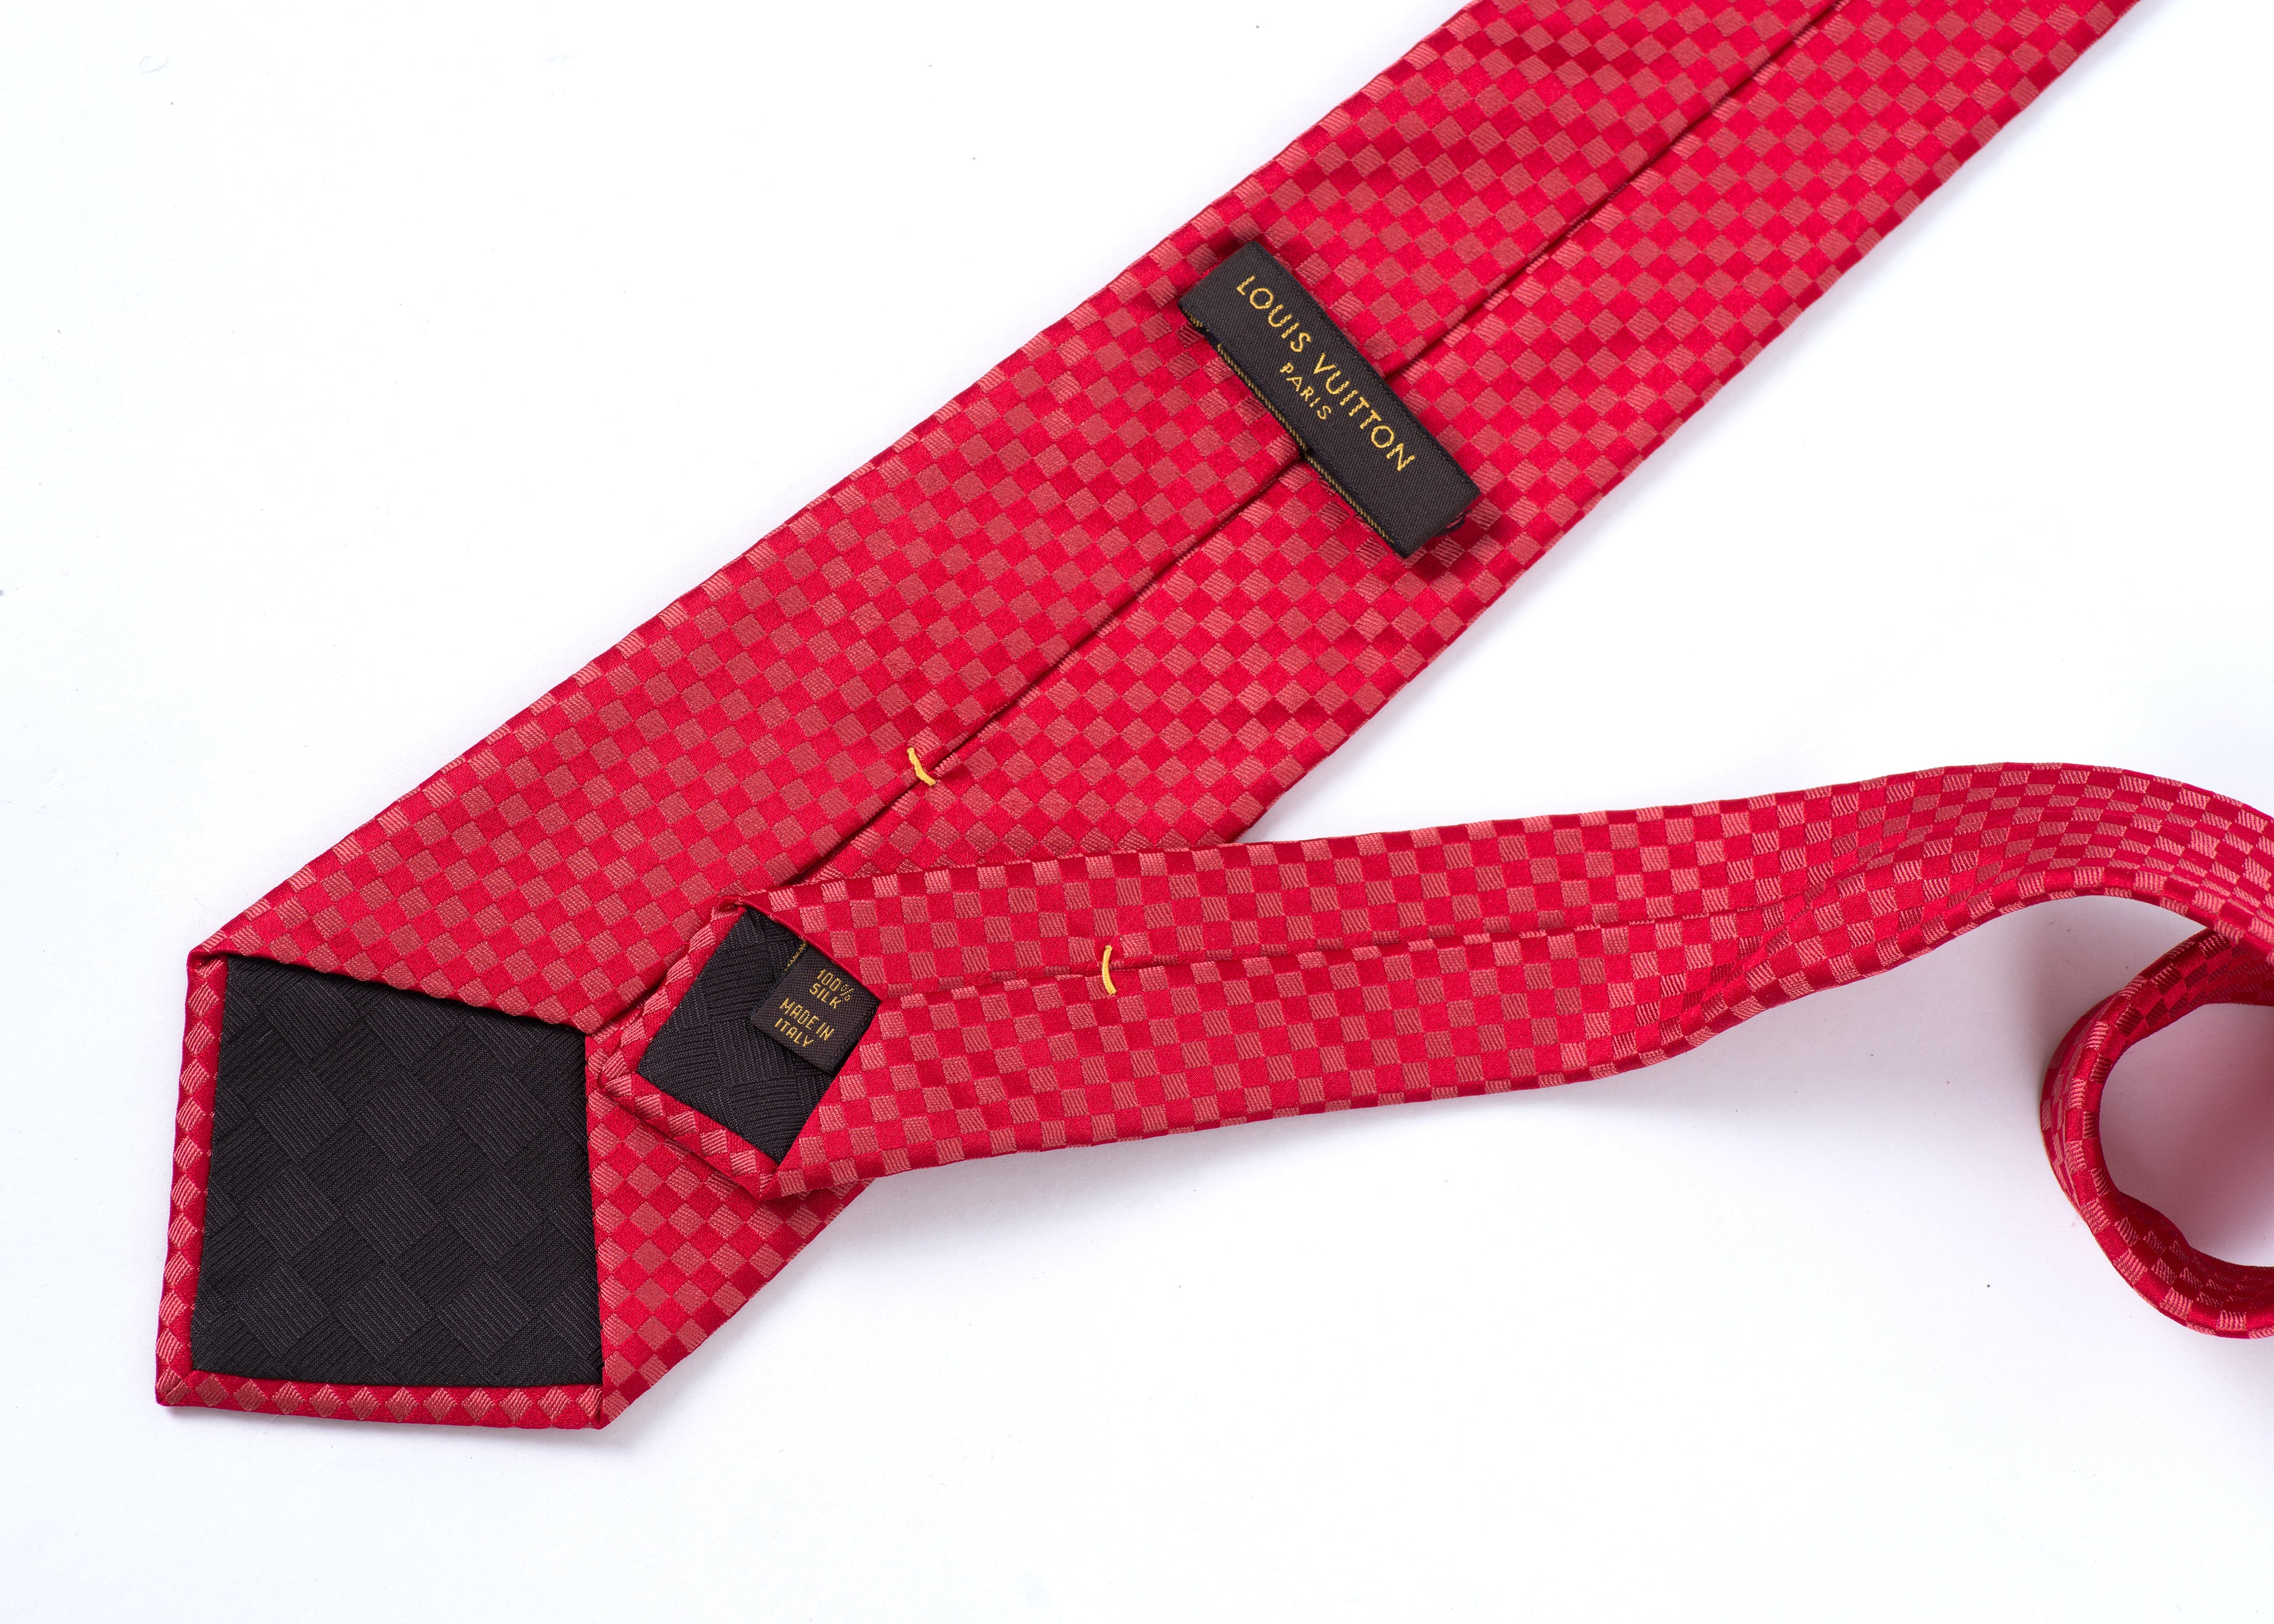 Louis Vuitton Pattern Print, Red Print Tie